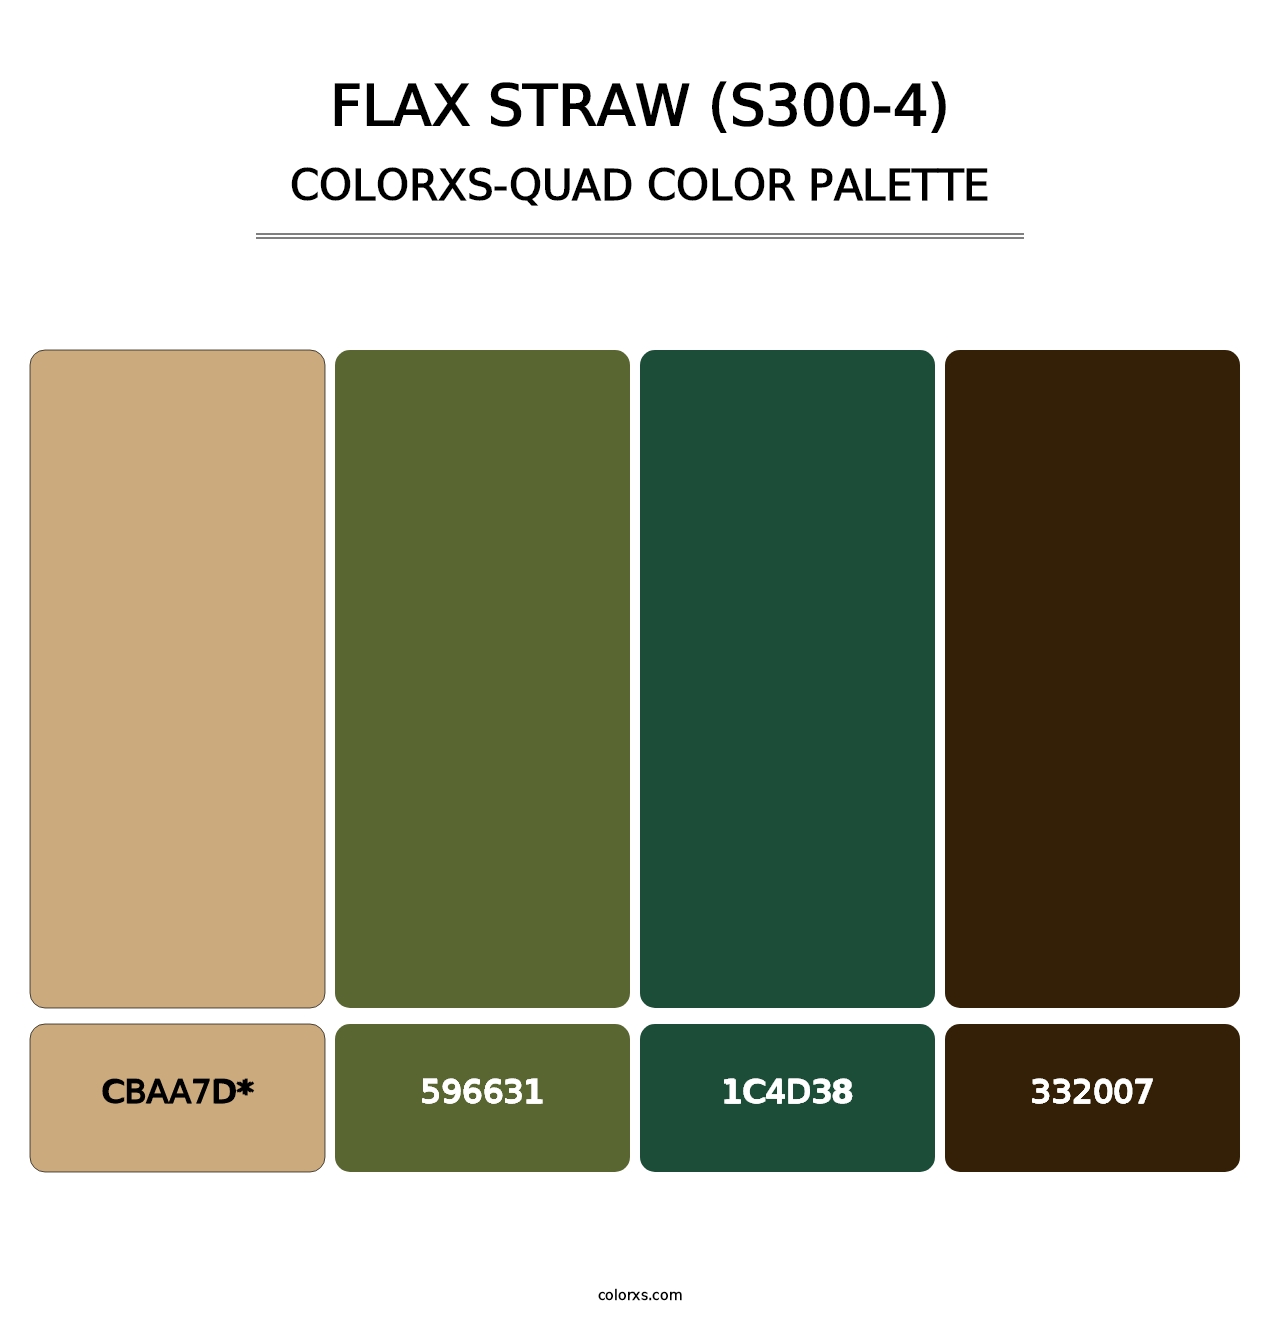 Flax Straw (S300-4) - Colorxs Quad Palette